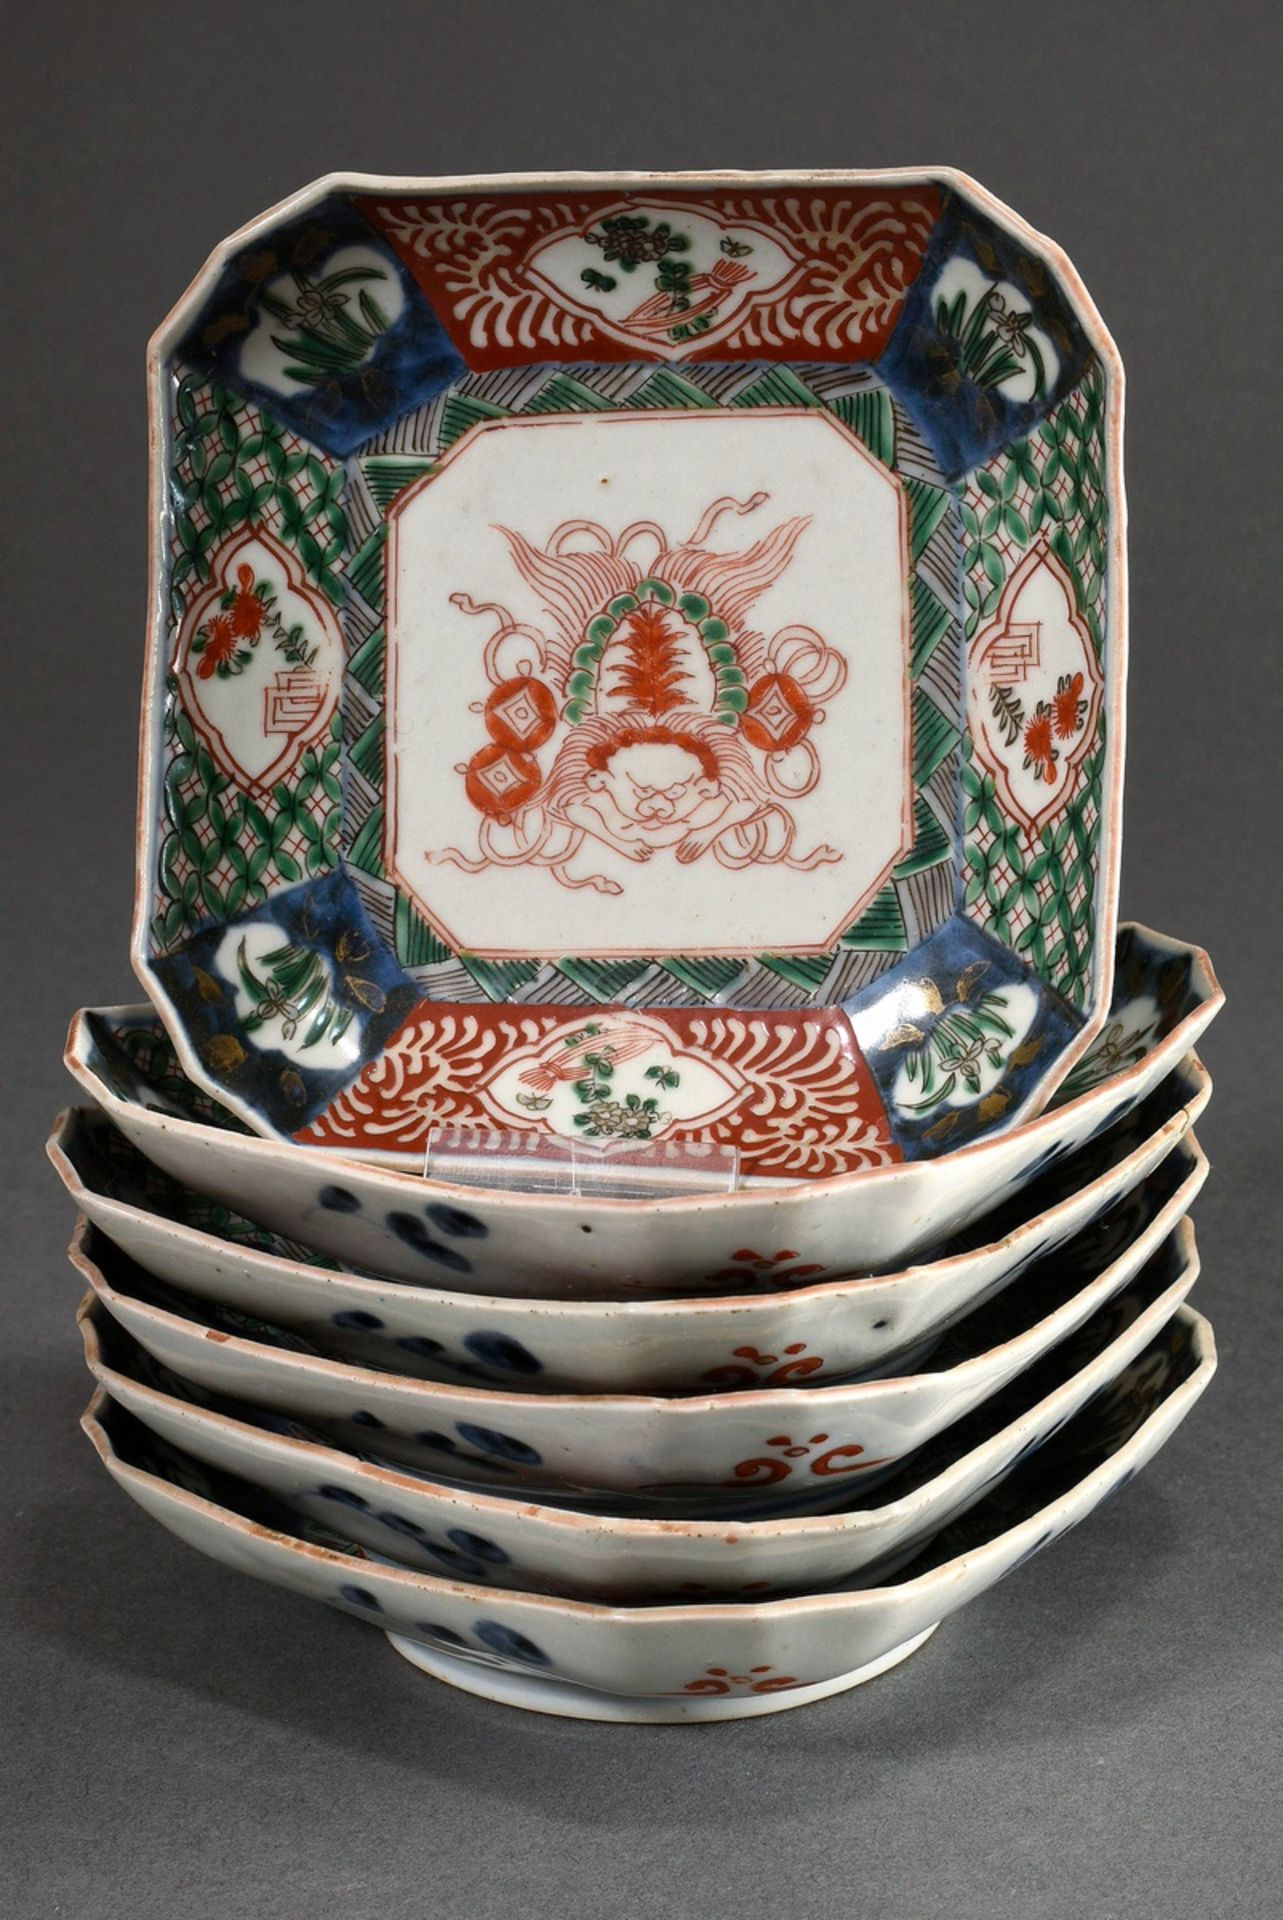 6 Octagonal Imari bowls with polychrome enamel painting "Fo lion and plants", Japan circa 1700, 13x